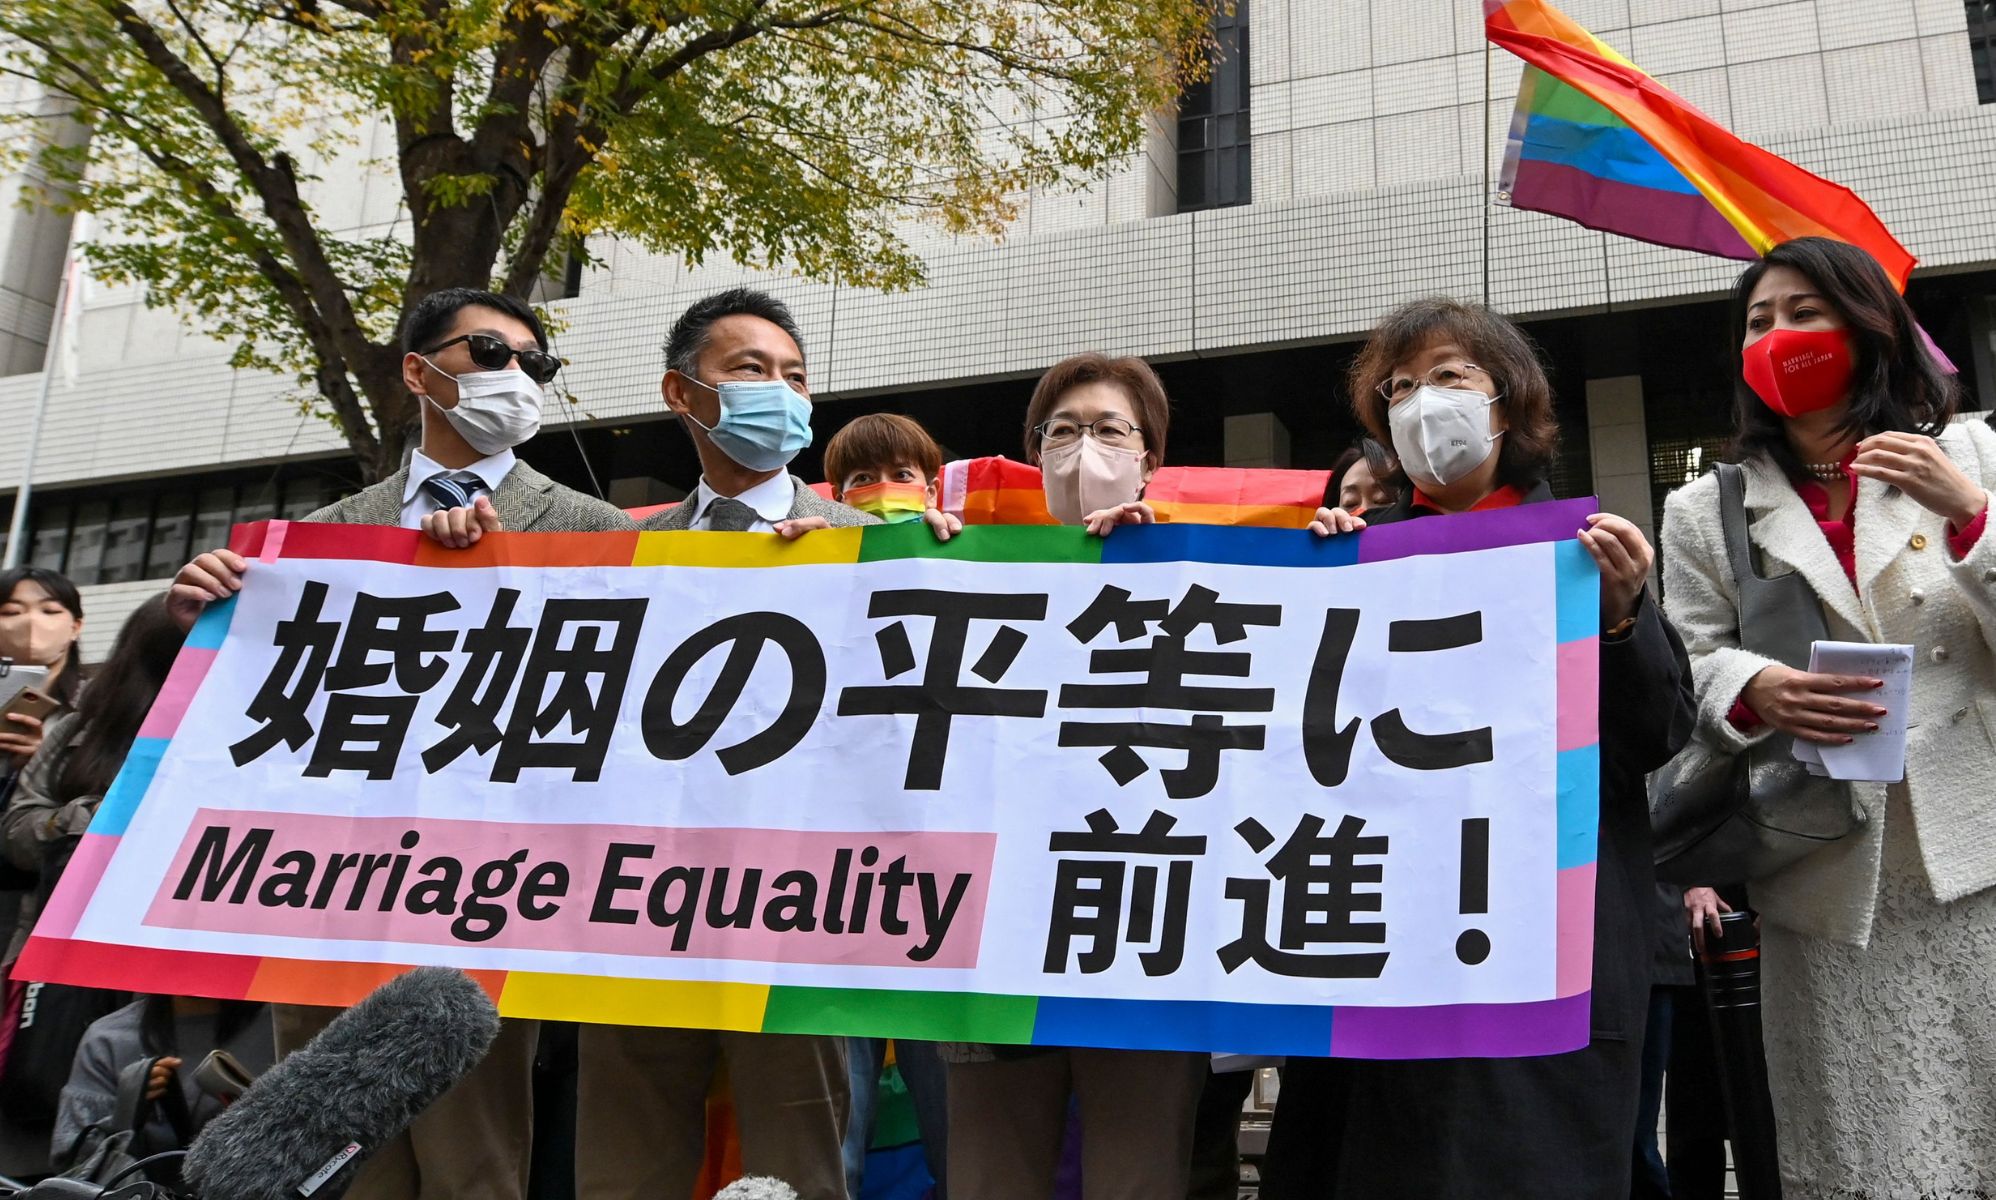 Japanischoolsex - Japan court rules against same-sex marriage ban